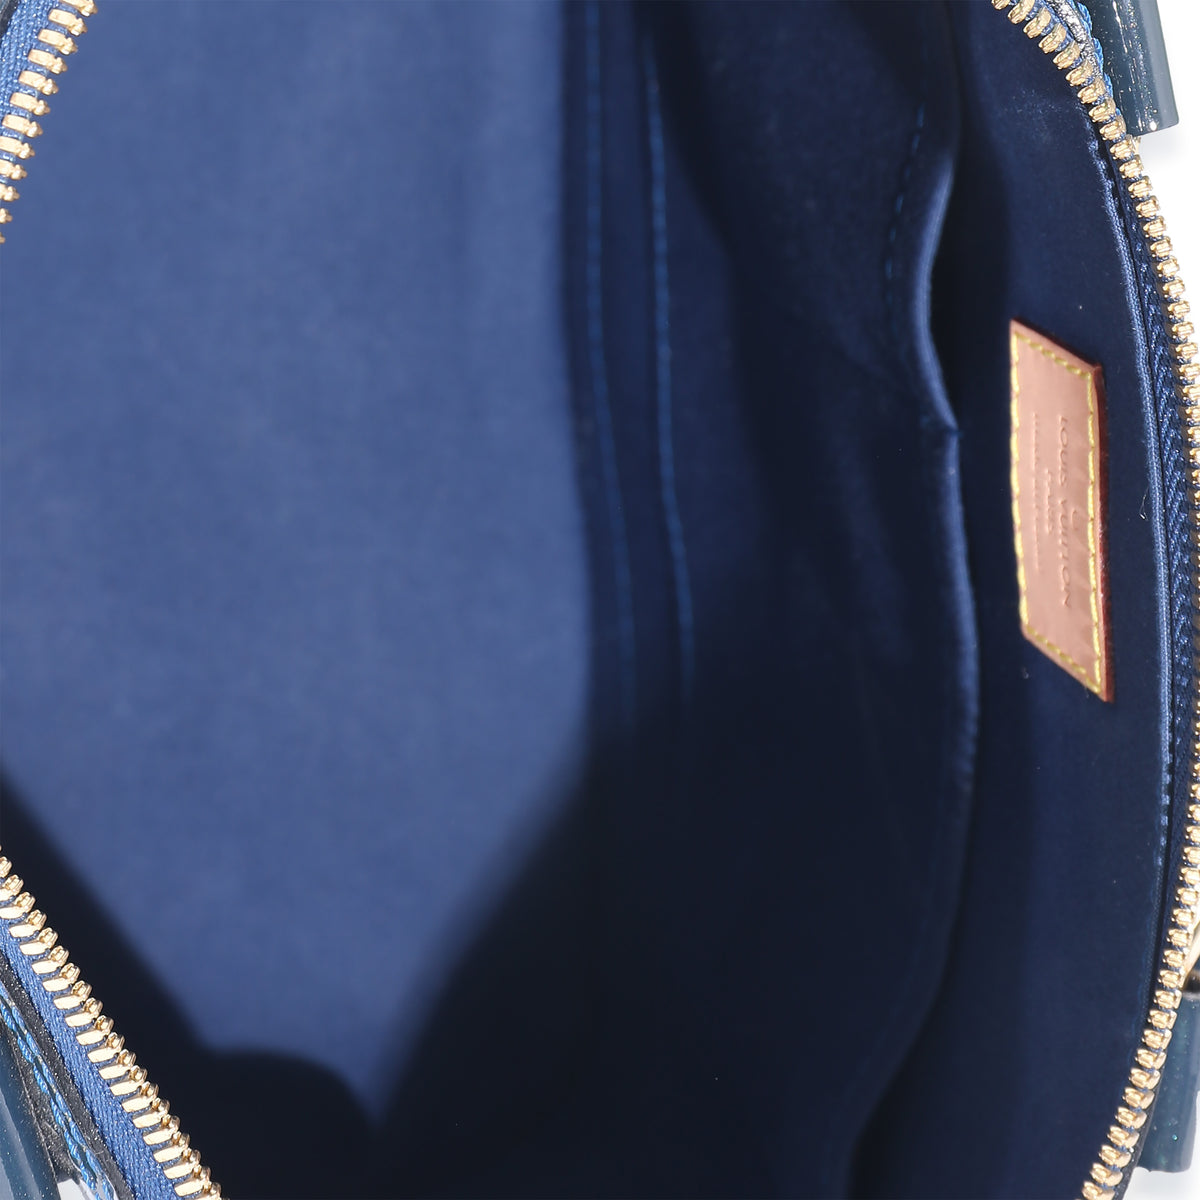 Louis Vuitton Alma GM in Bleu Infini Vernis - SOLD